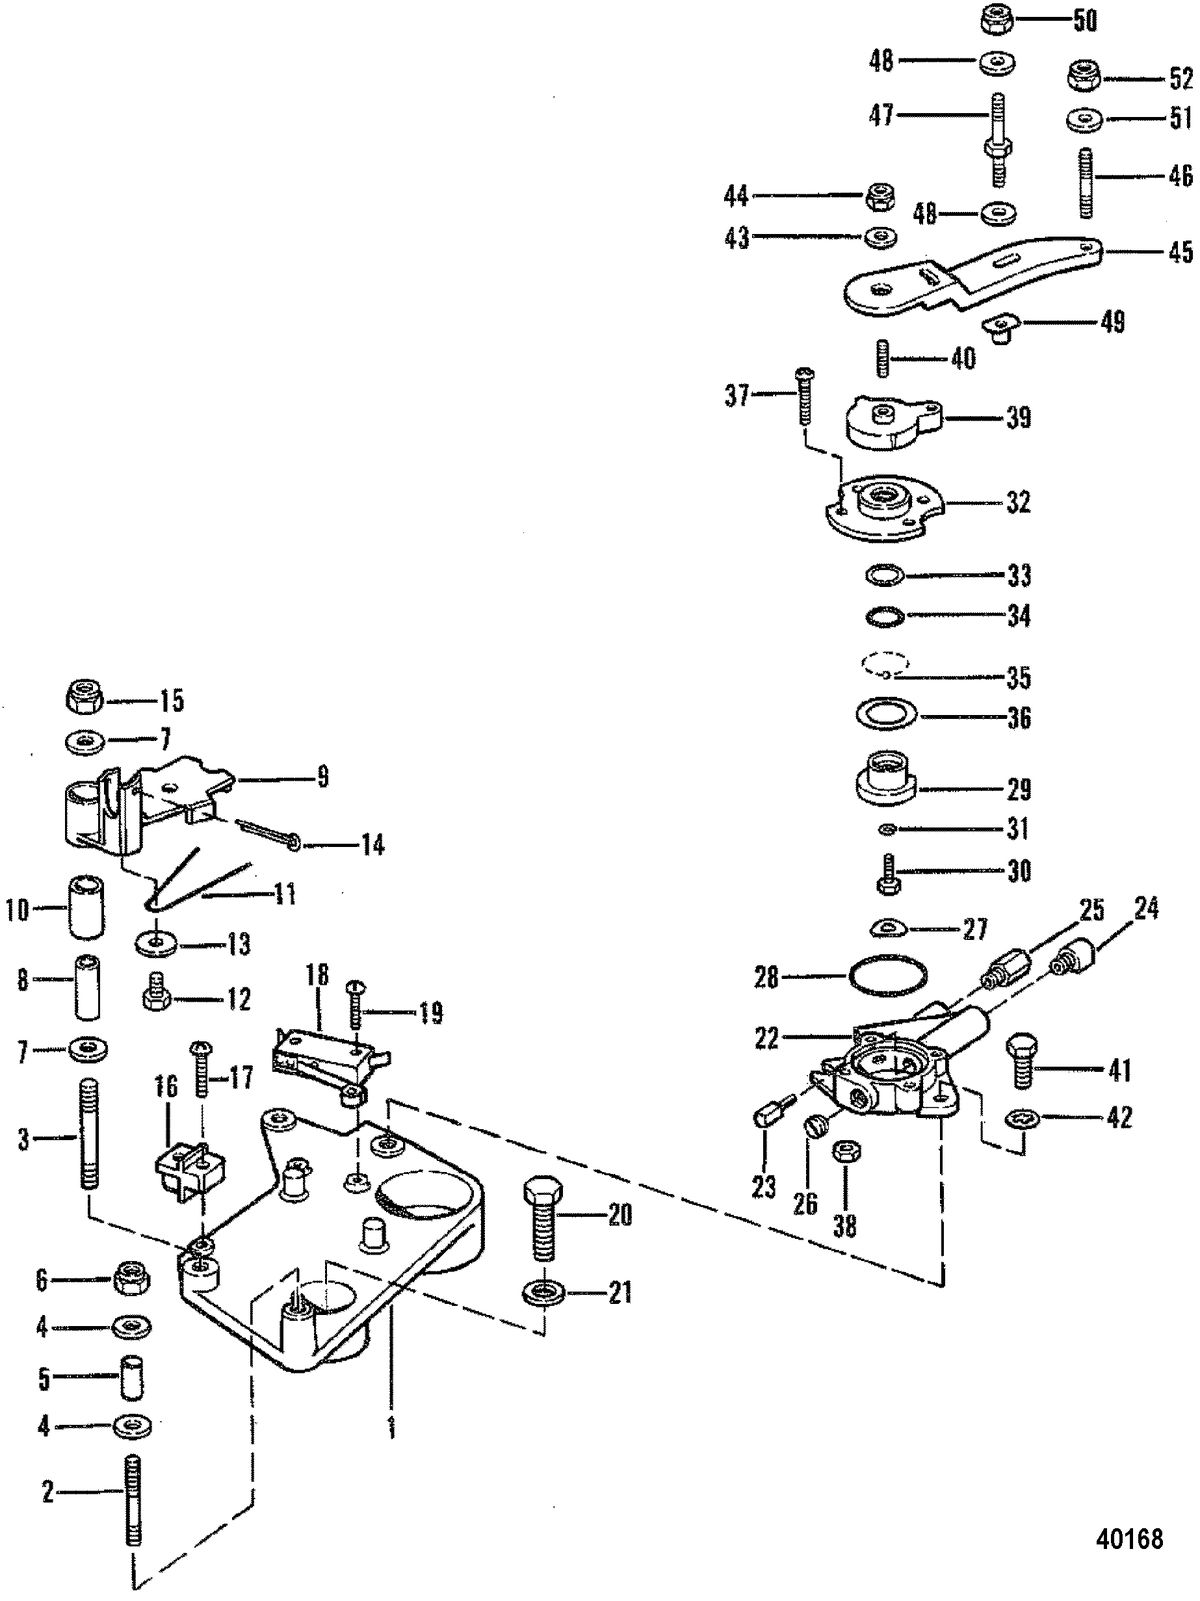 MERCRUISER 260 ENGINE (G.M.) DRIVESHAFT EXTENSION COMPONENTS